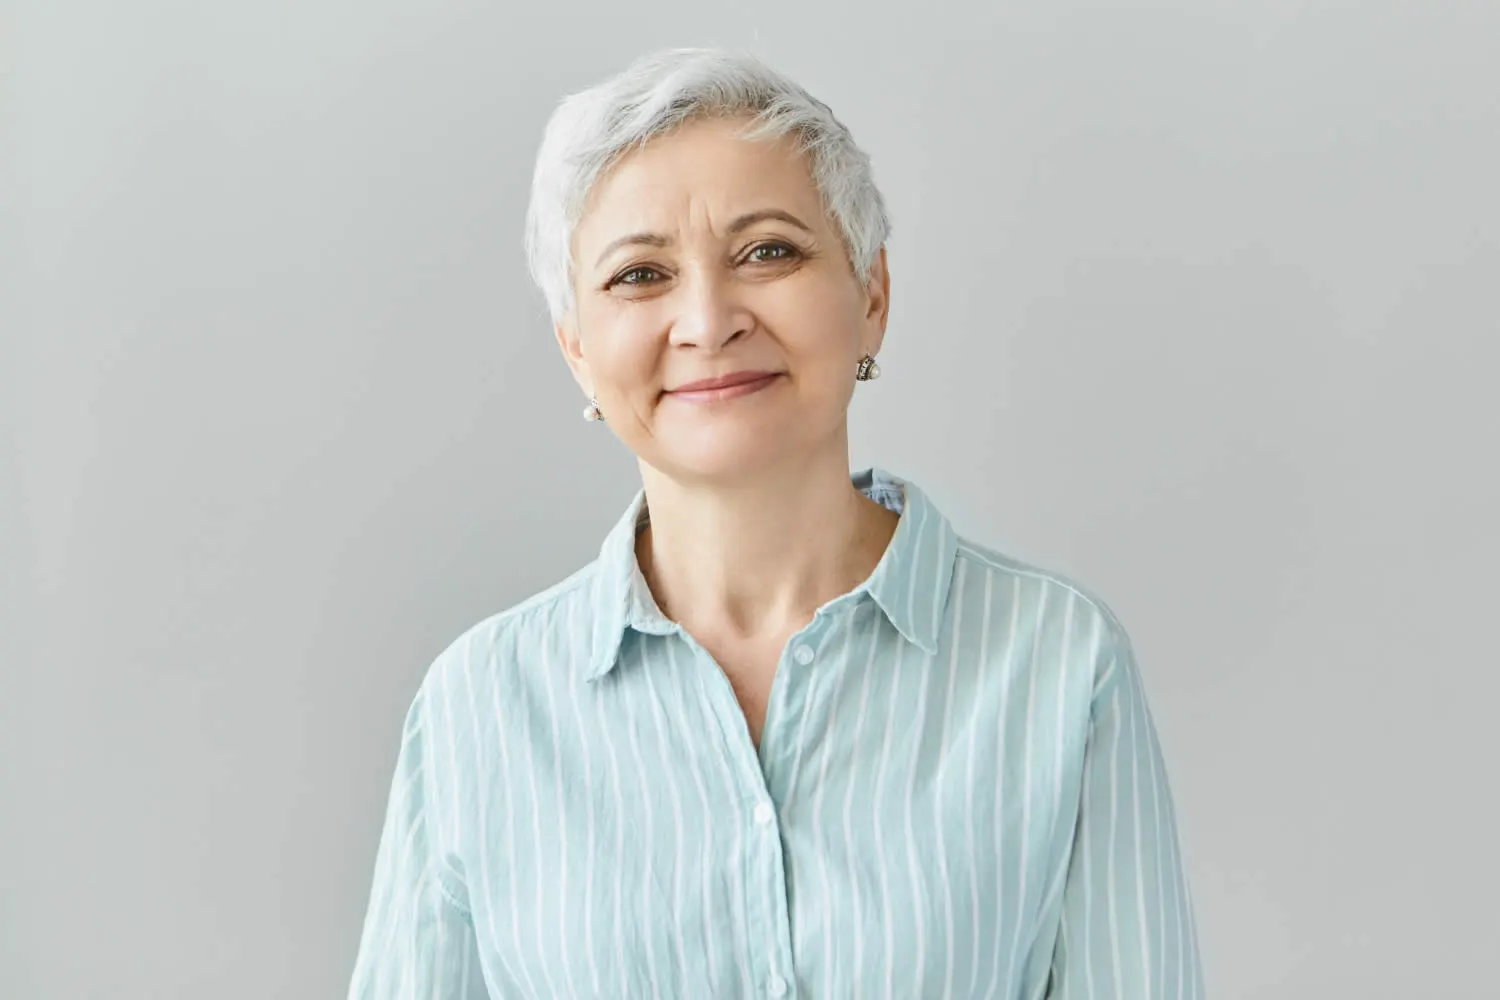 older-woman